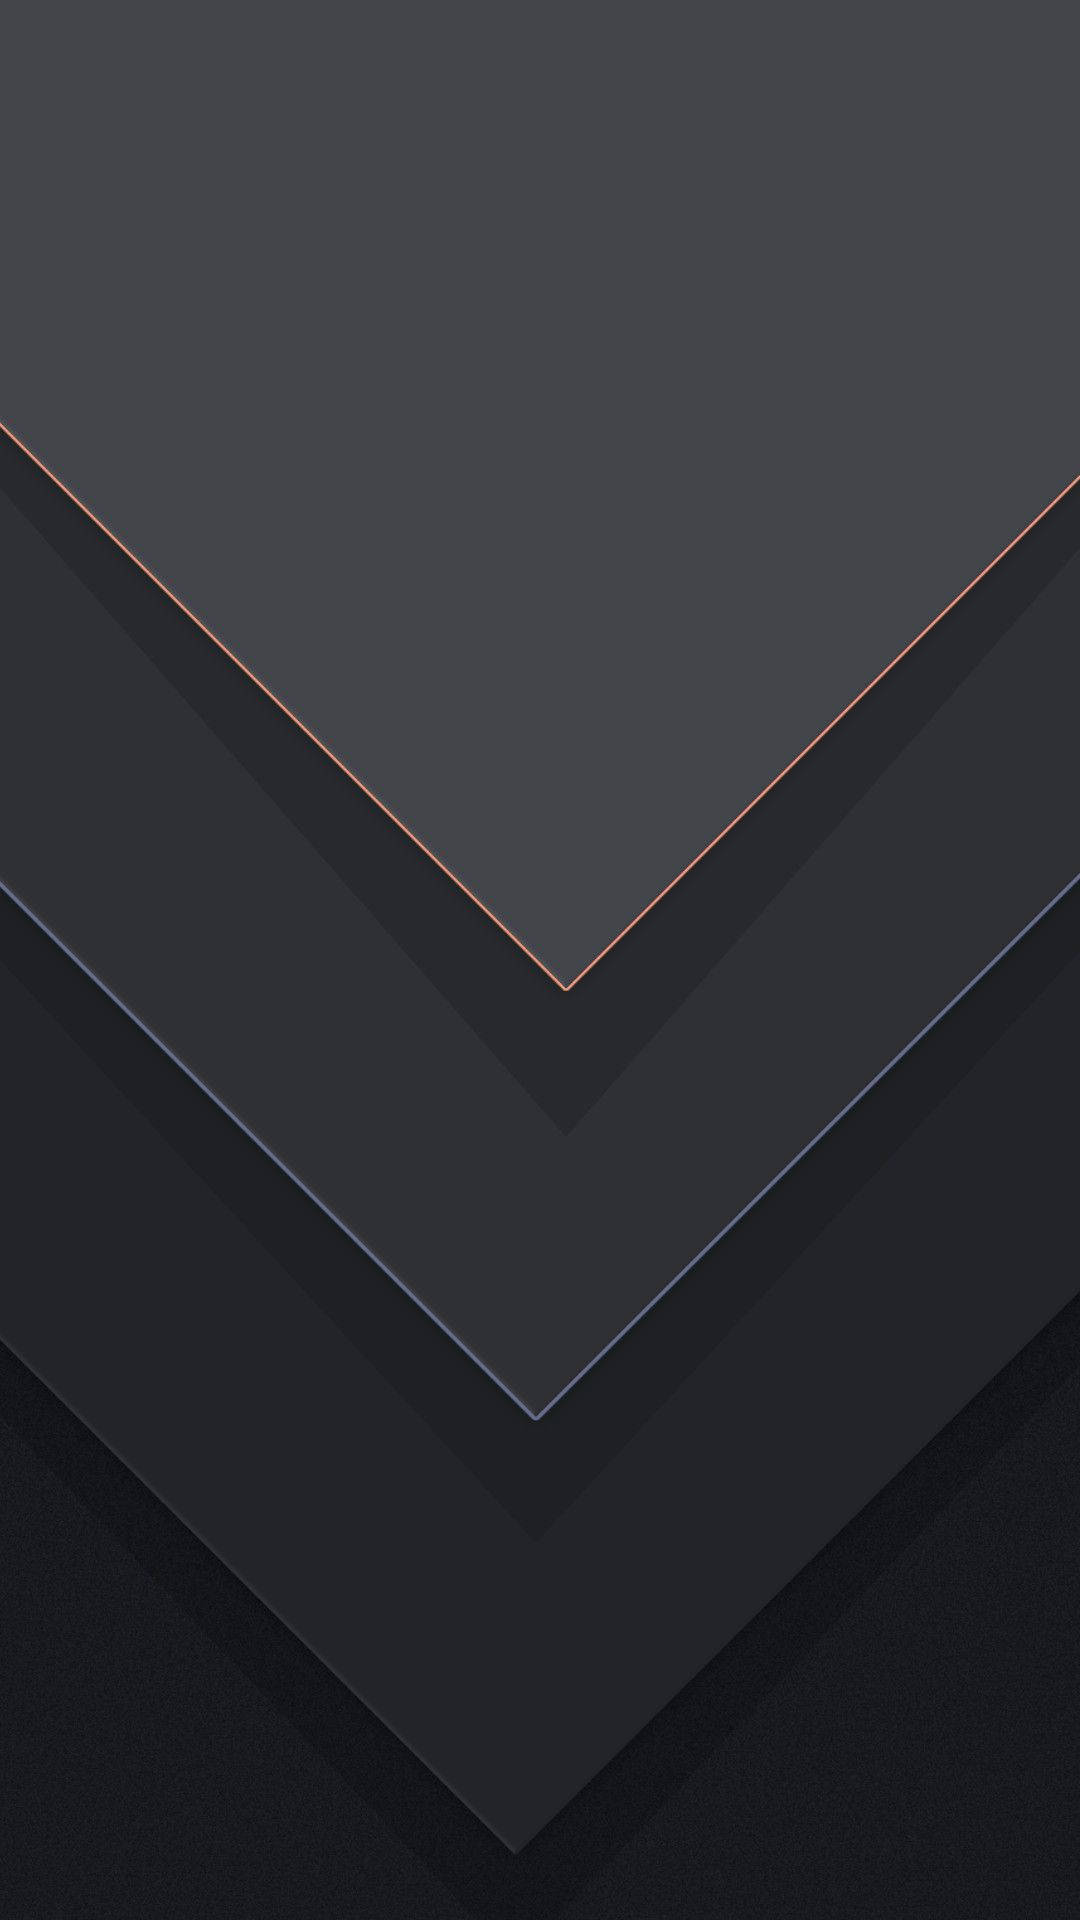 Sort Android Inverterede Trekanter Wallpaper